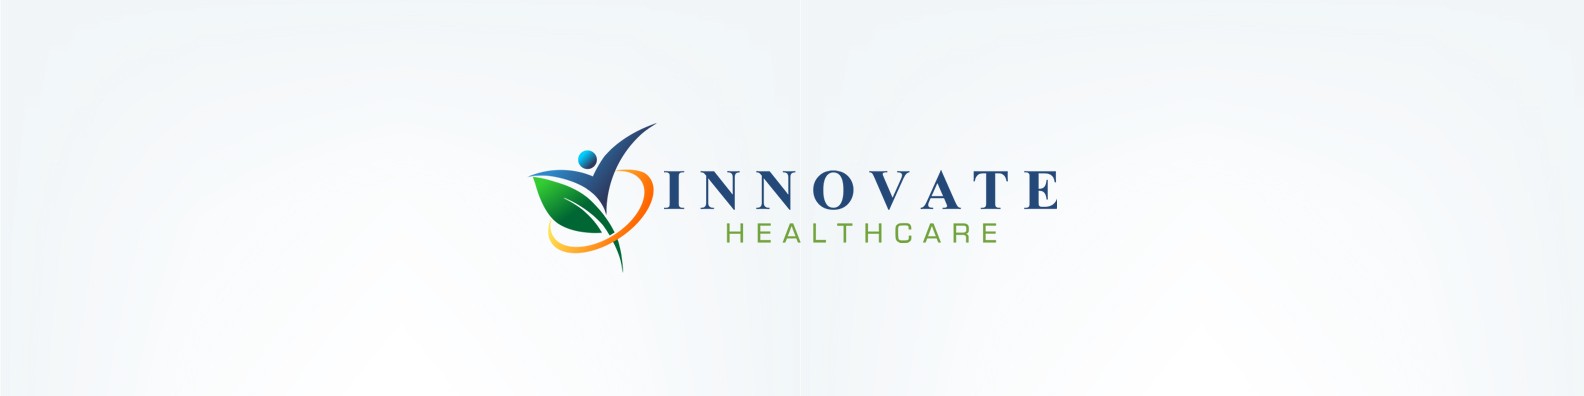 innovate healthcare logo